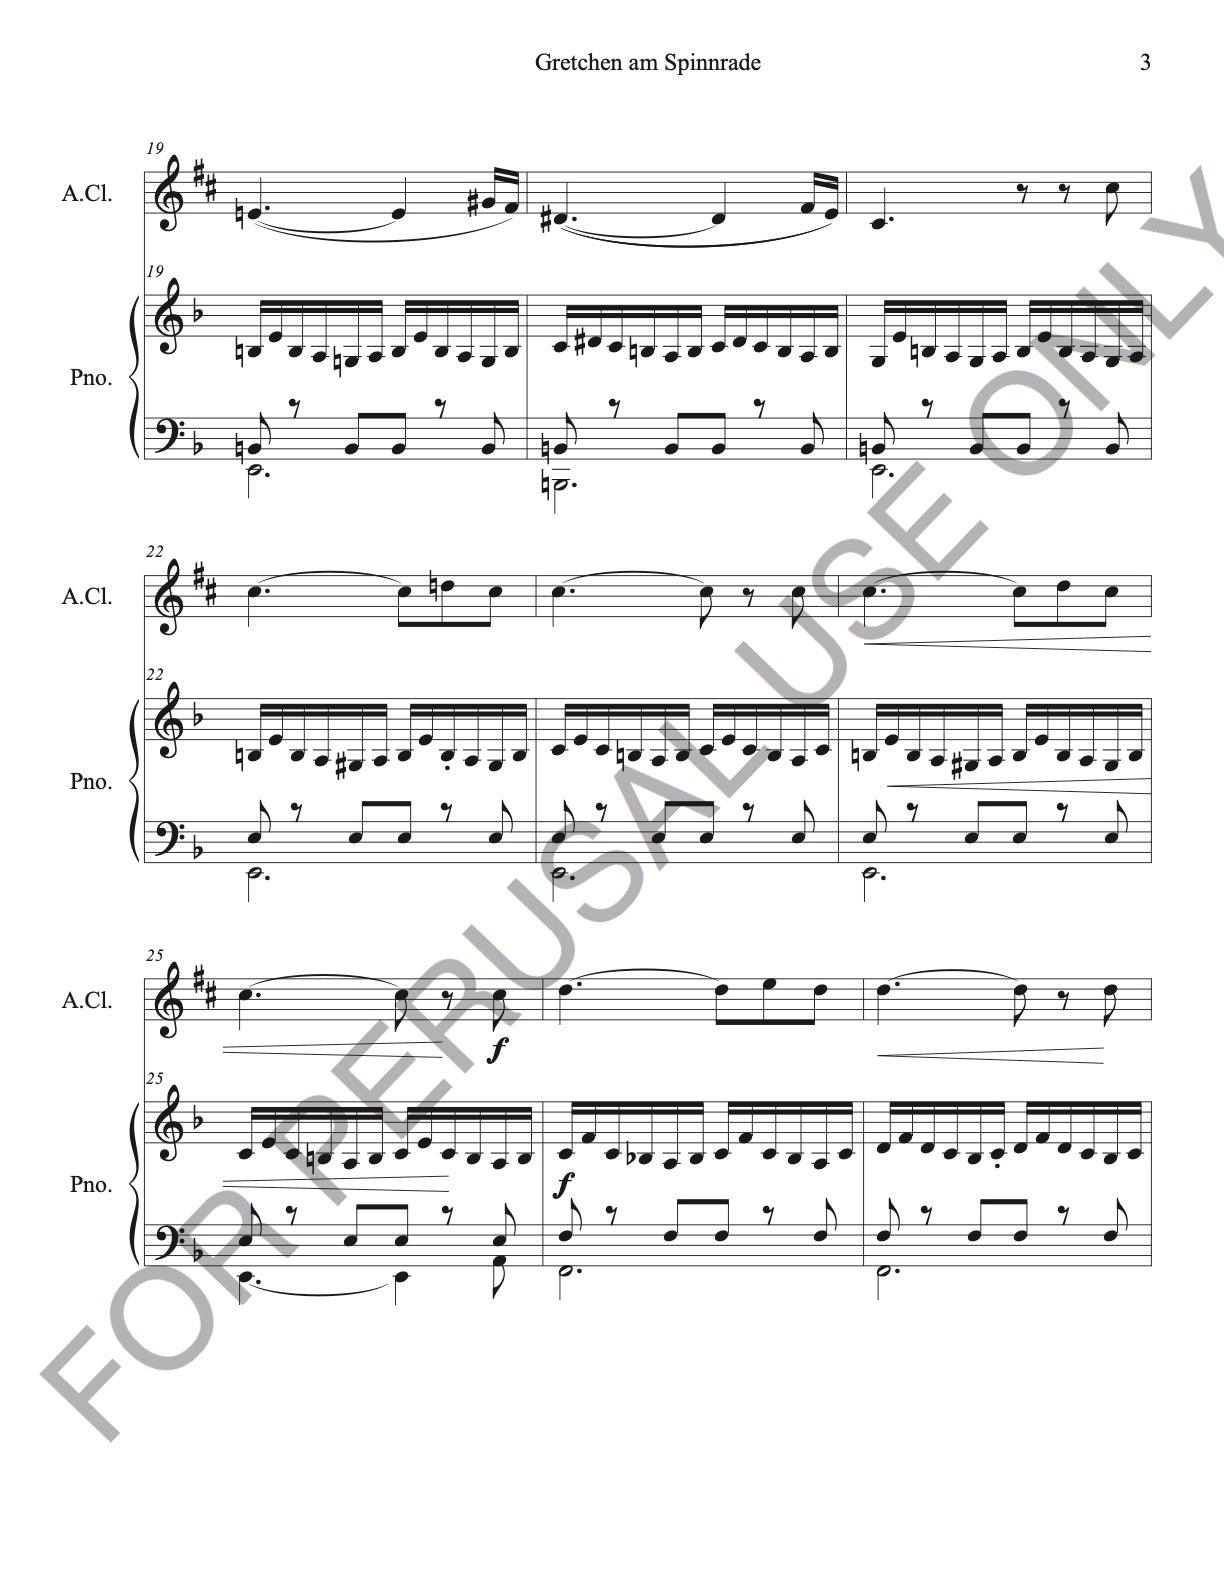 Alto Clarinet and Piano: Schubert's Gretchen am Spinnrade - ChaipruckMekara